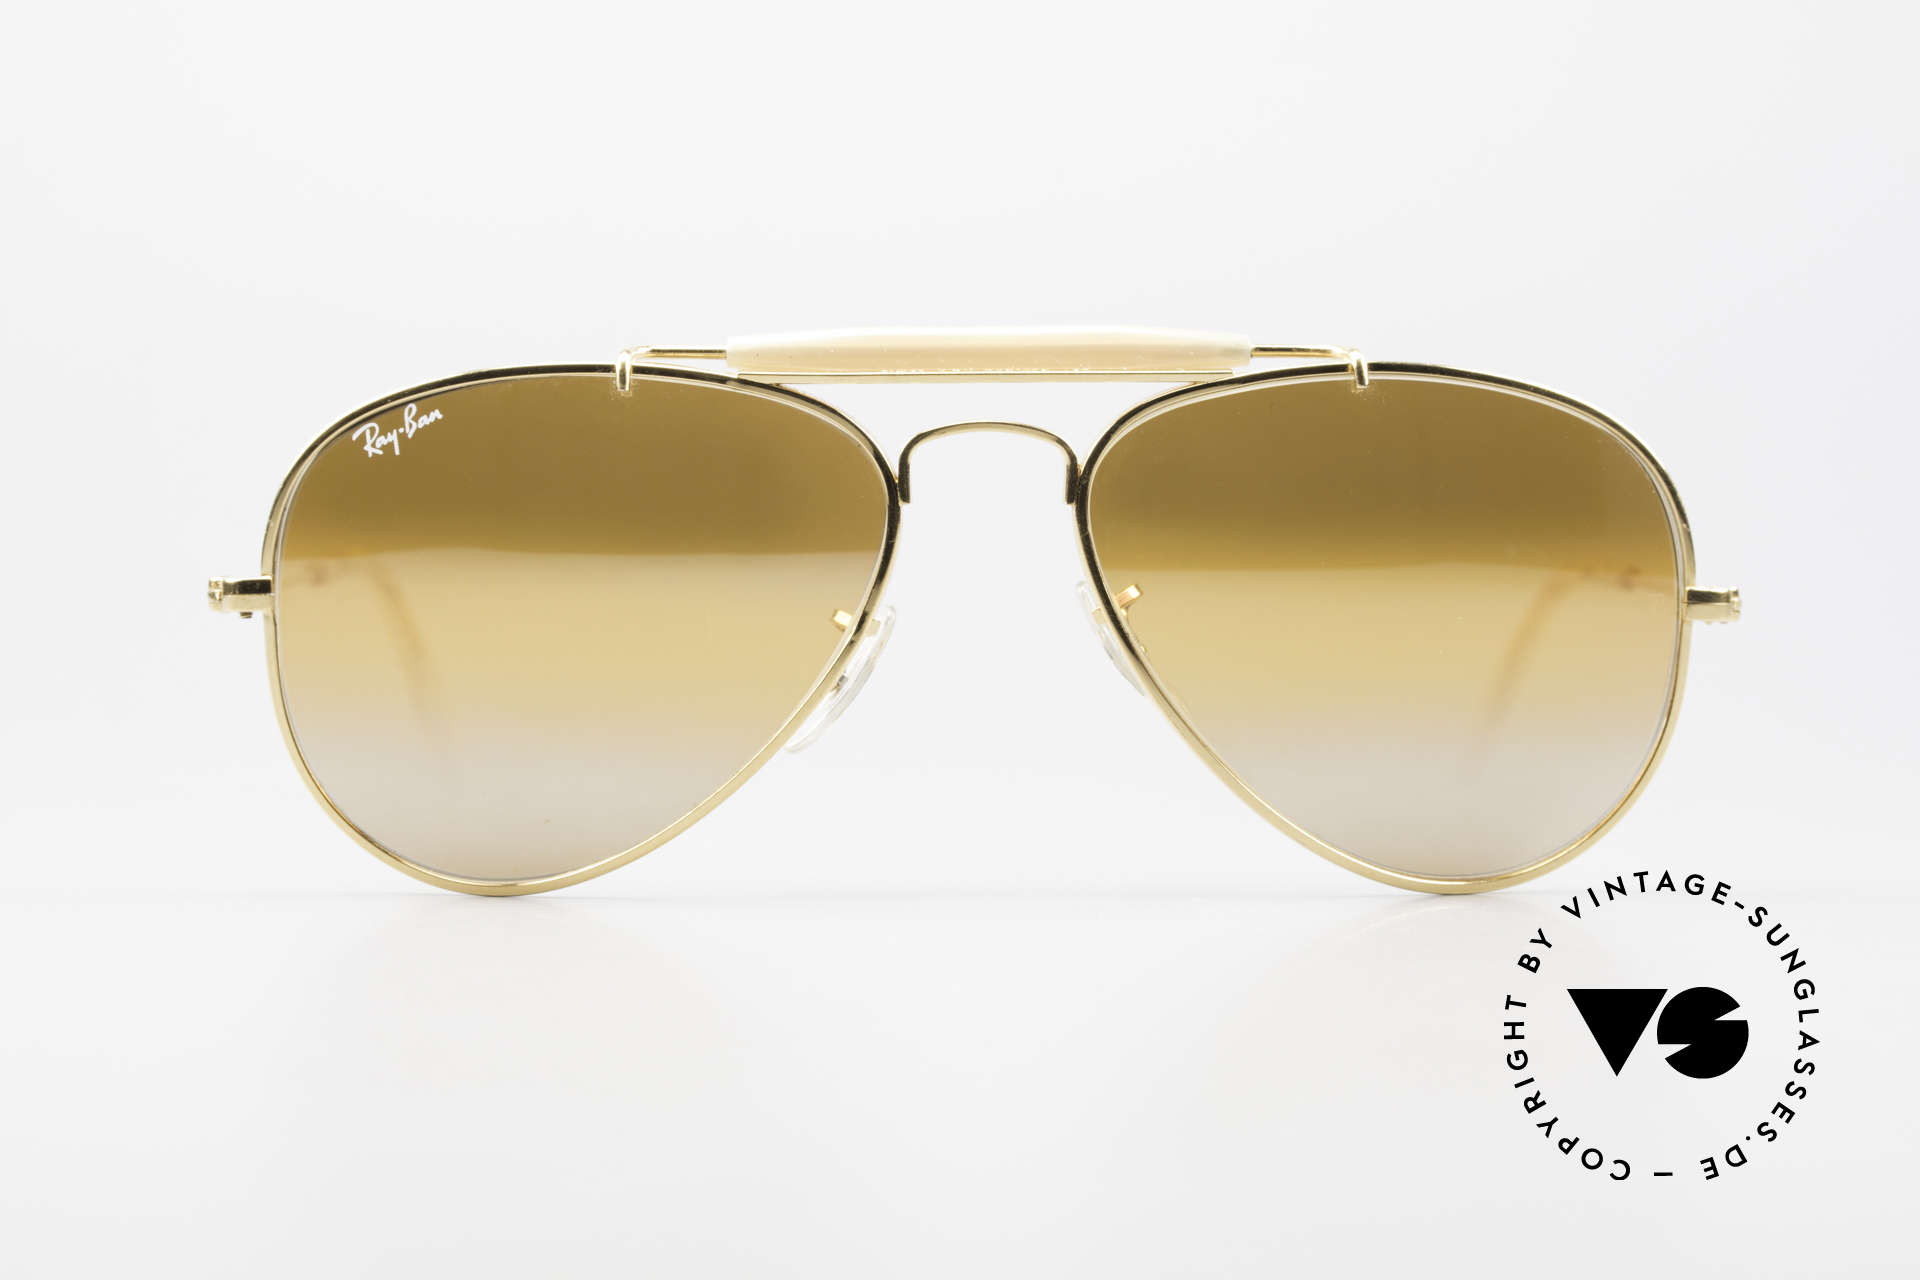 Sunglasses Ray Ban Outdoorsman 56 B&L USA Luxottica Italy Hybrid